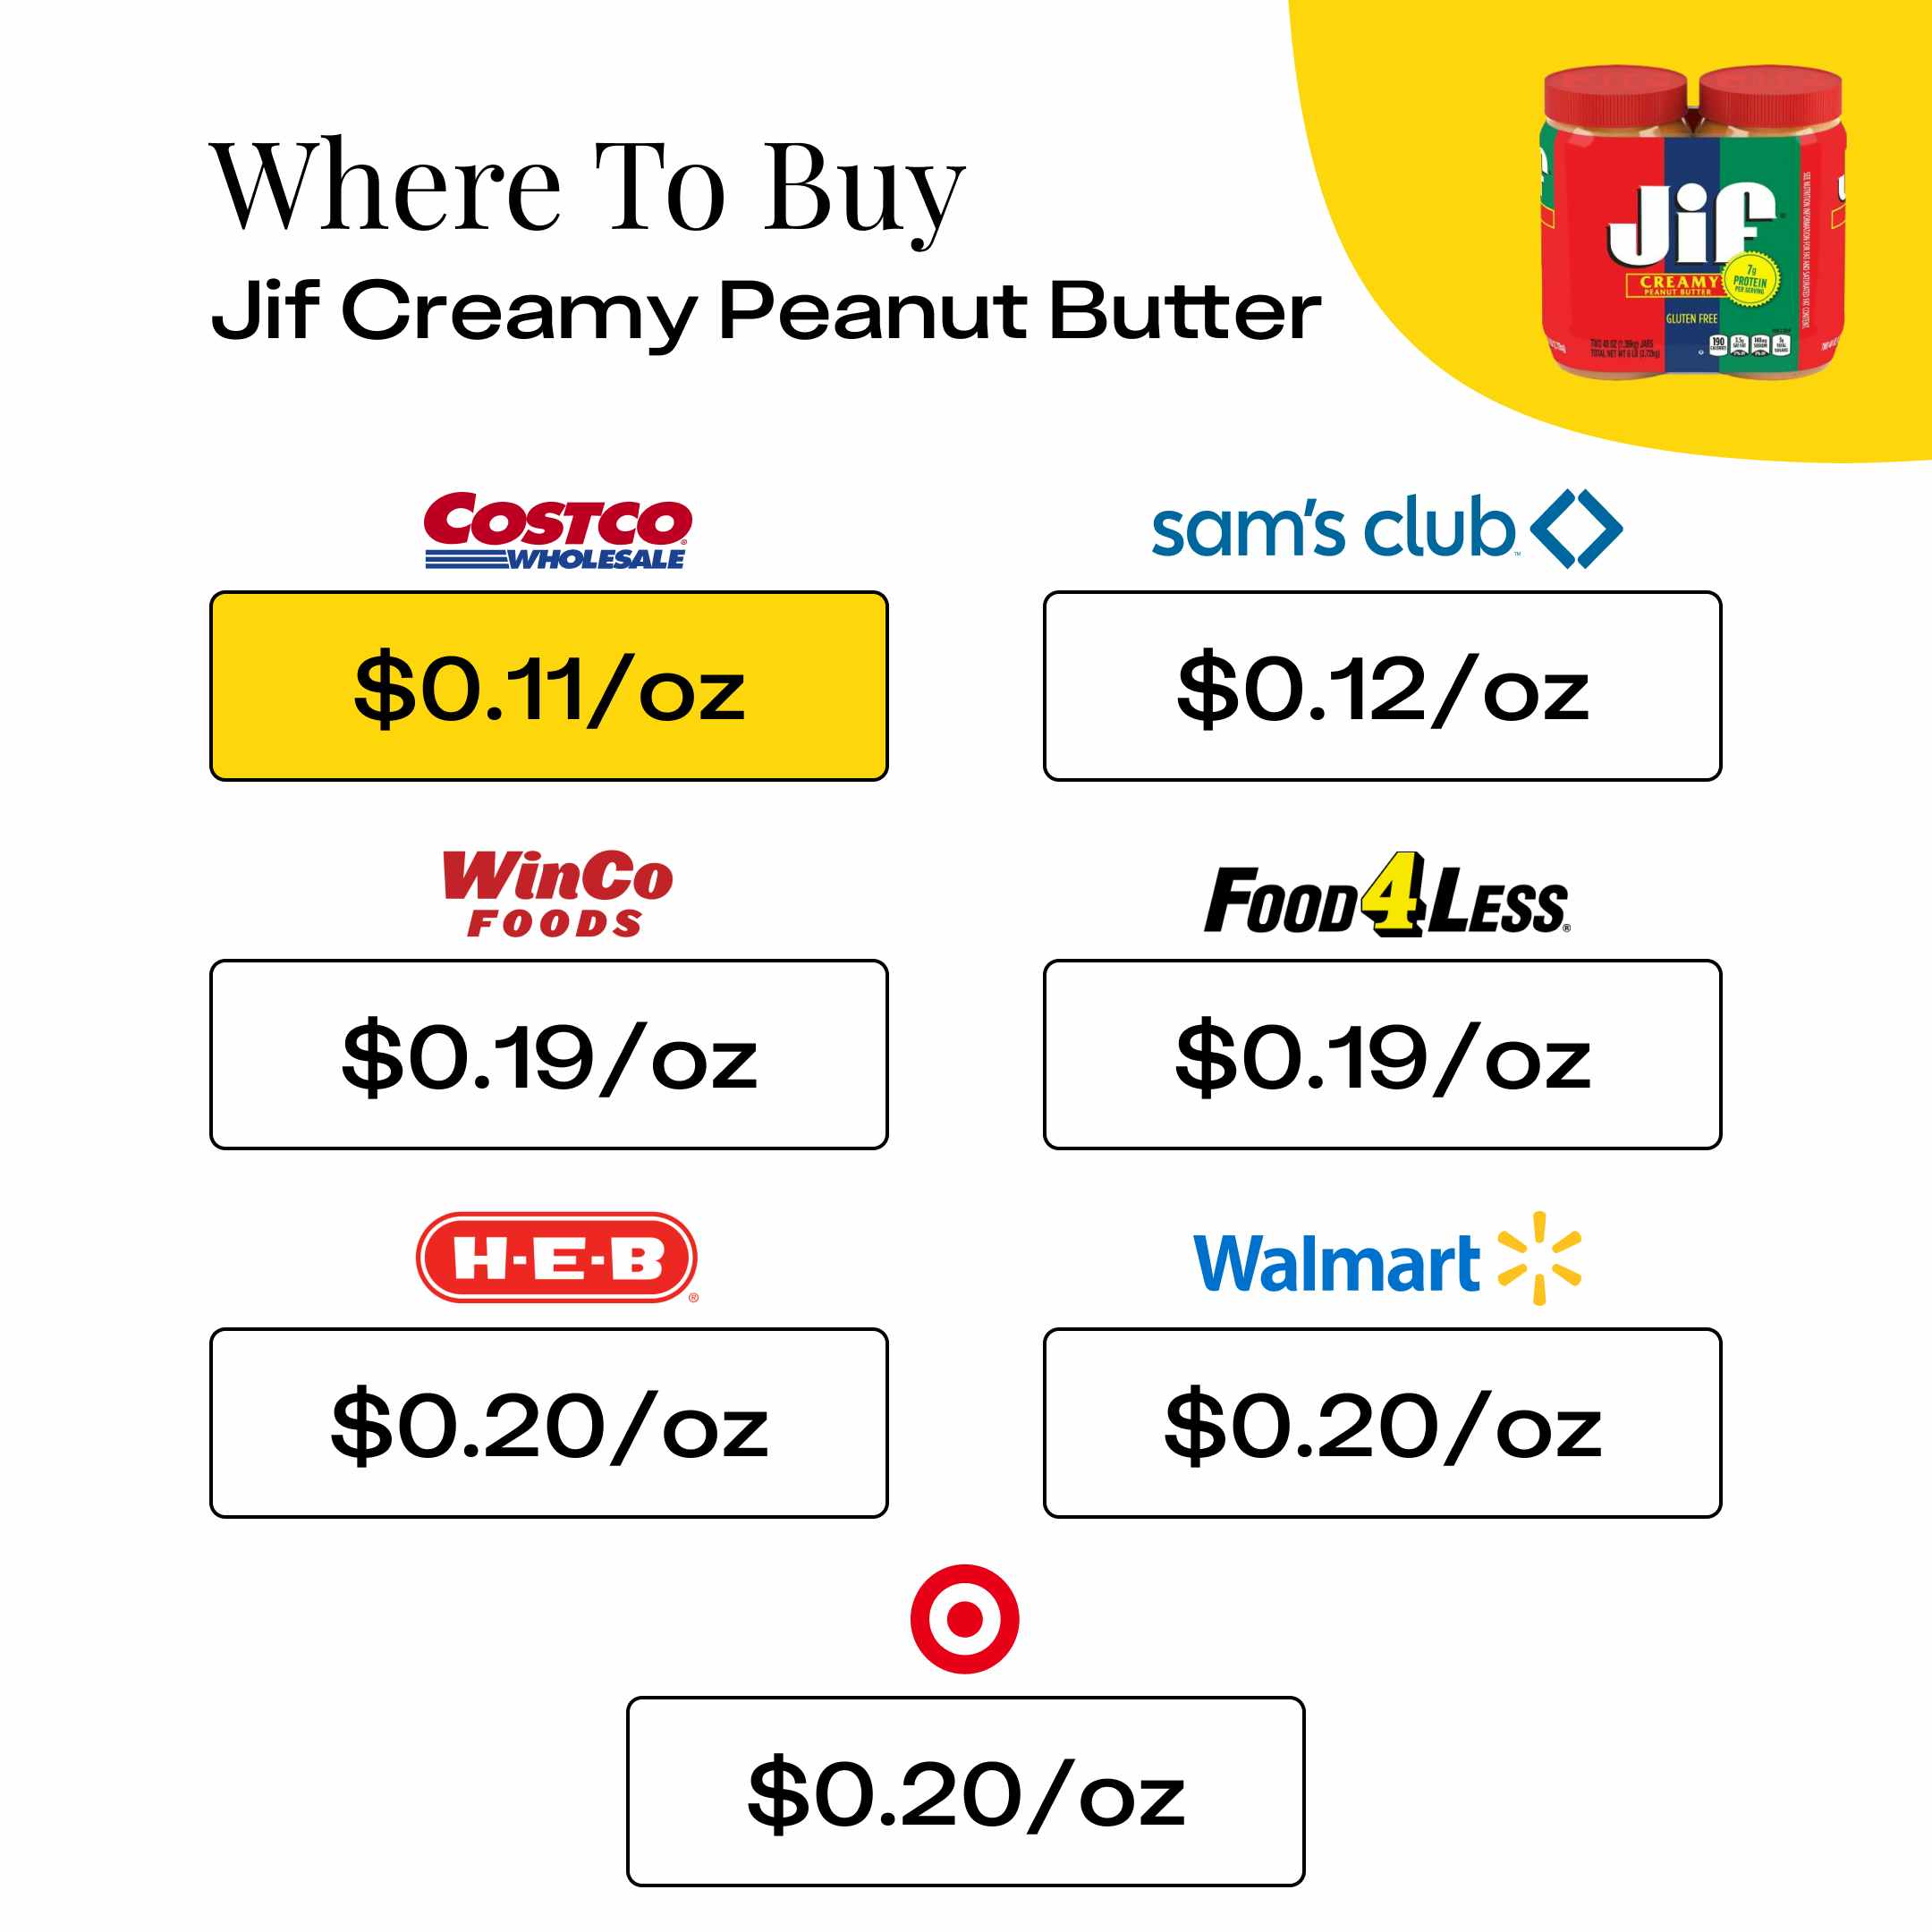 Where To Buy Jif Creamy Peanut Butter